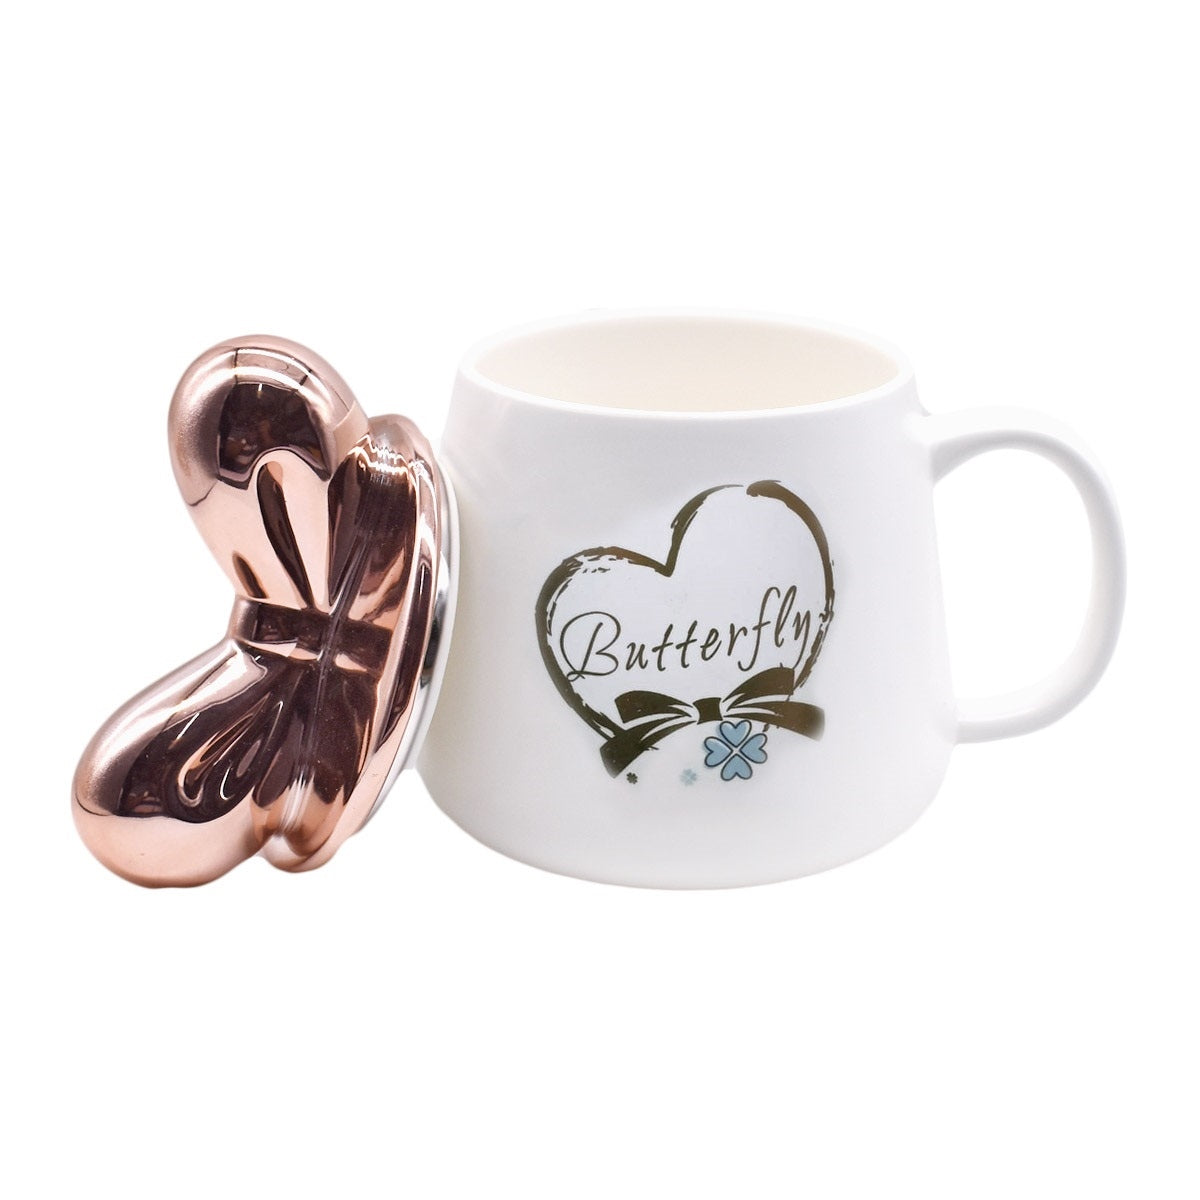 Fancy Ceramic Coffee or Tea Mug with Lid and Handle (8521)